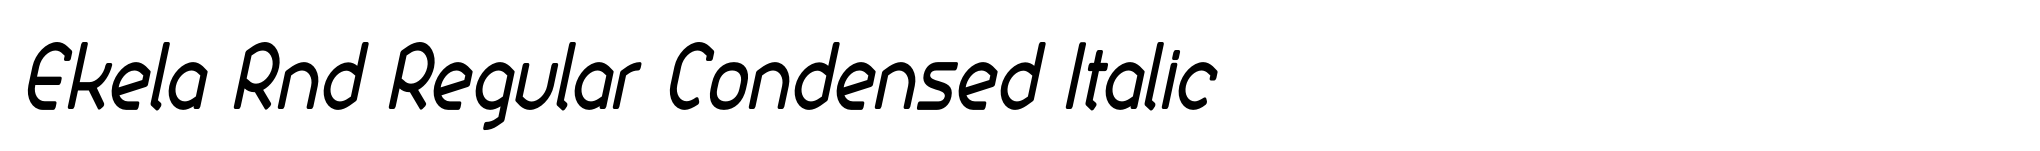 Ekela Rnd Regular Condensed Italic image